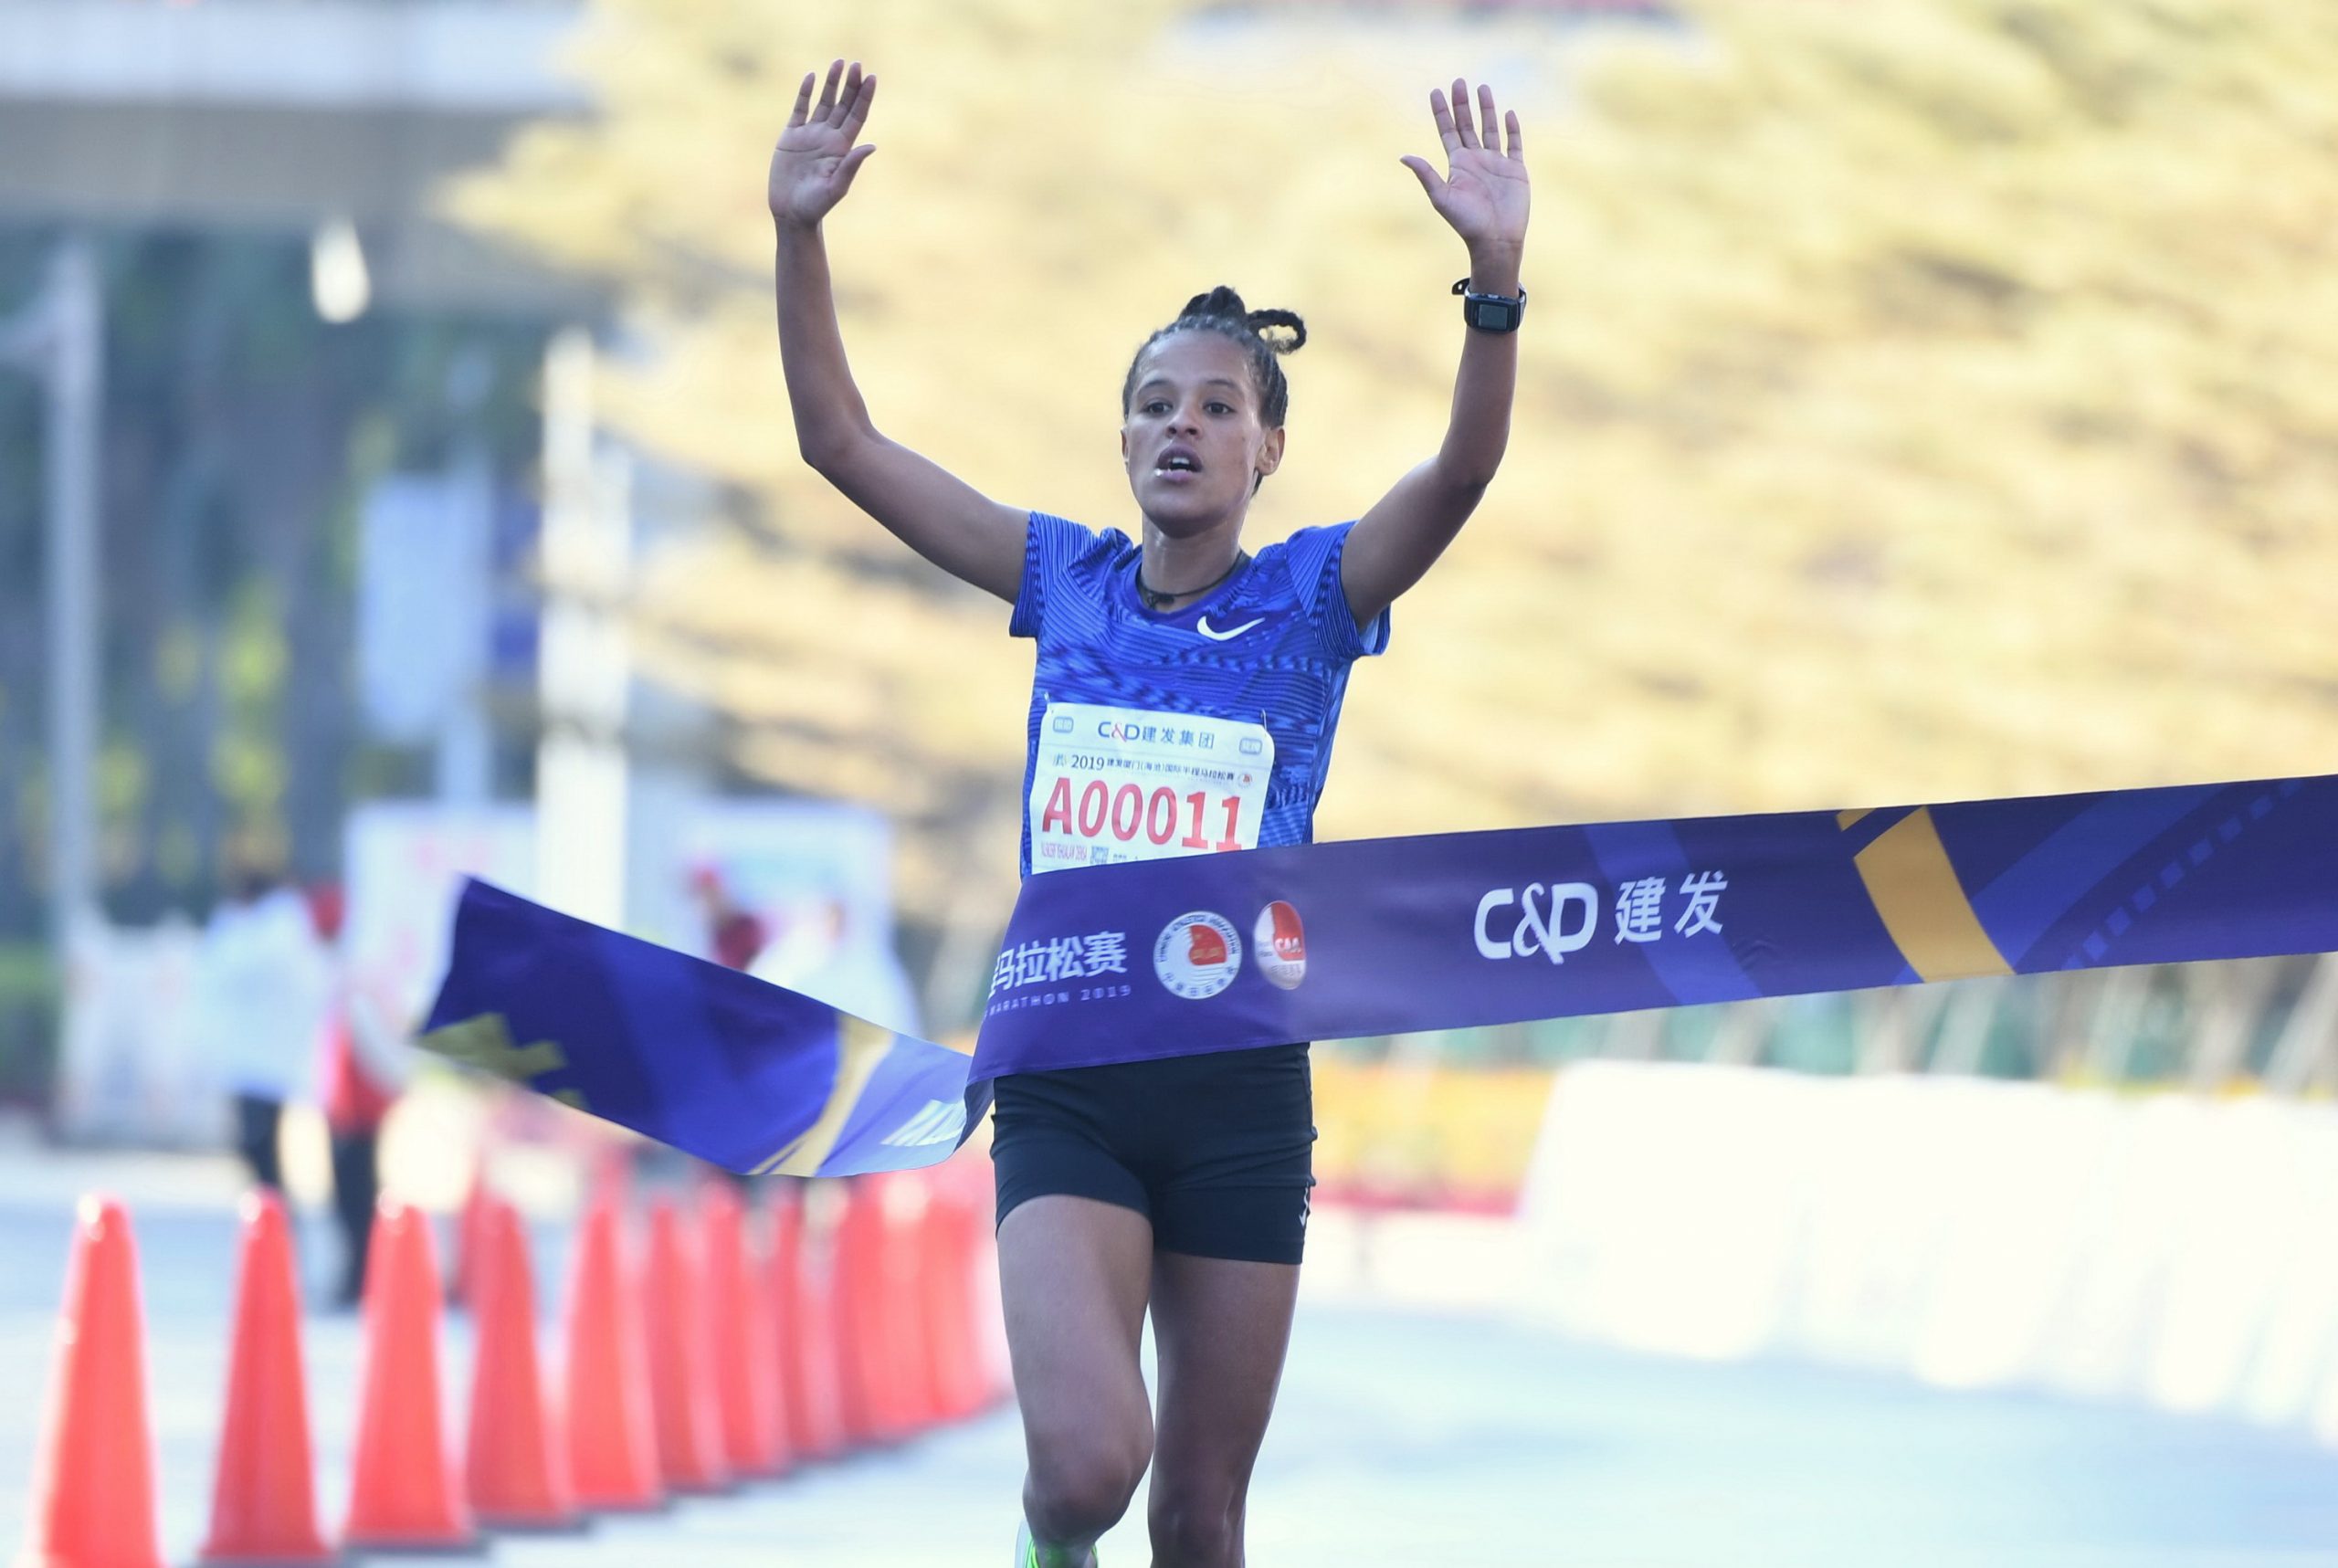 191208 -- XIAMEN, Dec. 8, 2019 -- Yalemzerf Yehualaw Densa of Ethiopia competes during the Xiamen Haicang International Half Marathon 2019 in Xiamen, southeast China s Fujian Province, Dec. 8, 2019.  SPCHINA-XIAMEN-XIAMENHAICANG INT L HALF MARATHON 2019 CN LinxShanchuan PUBLICATIONxNOTxINxCHN